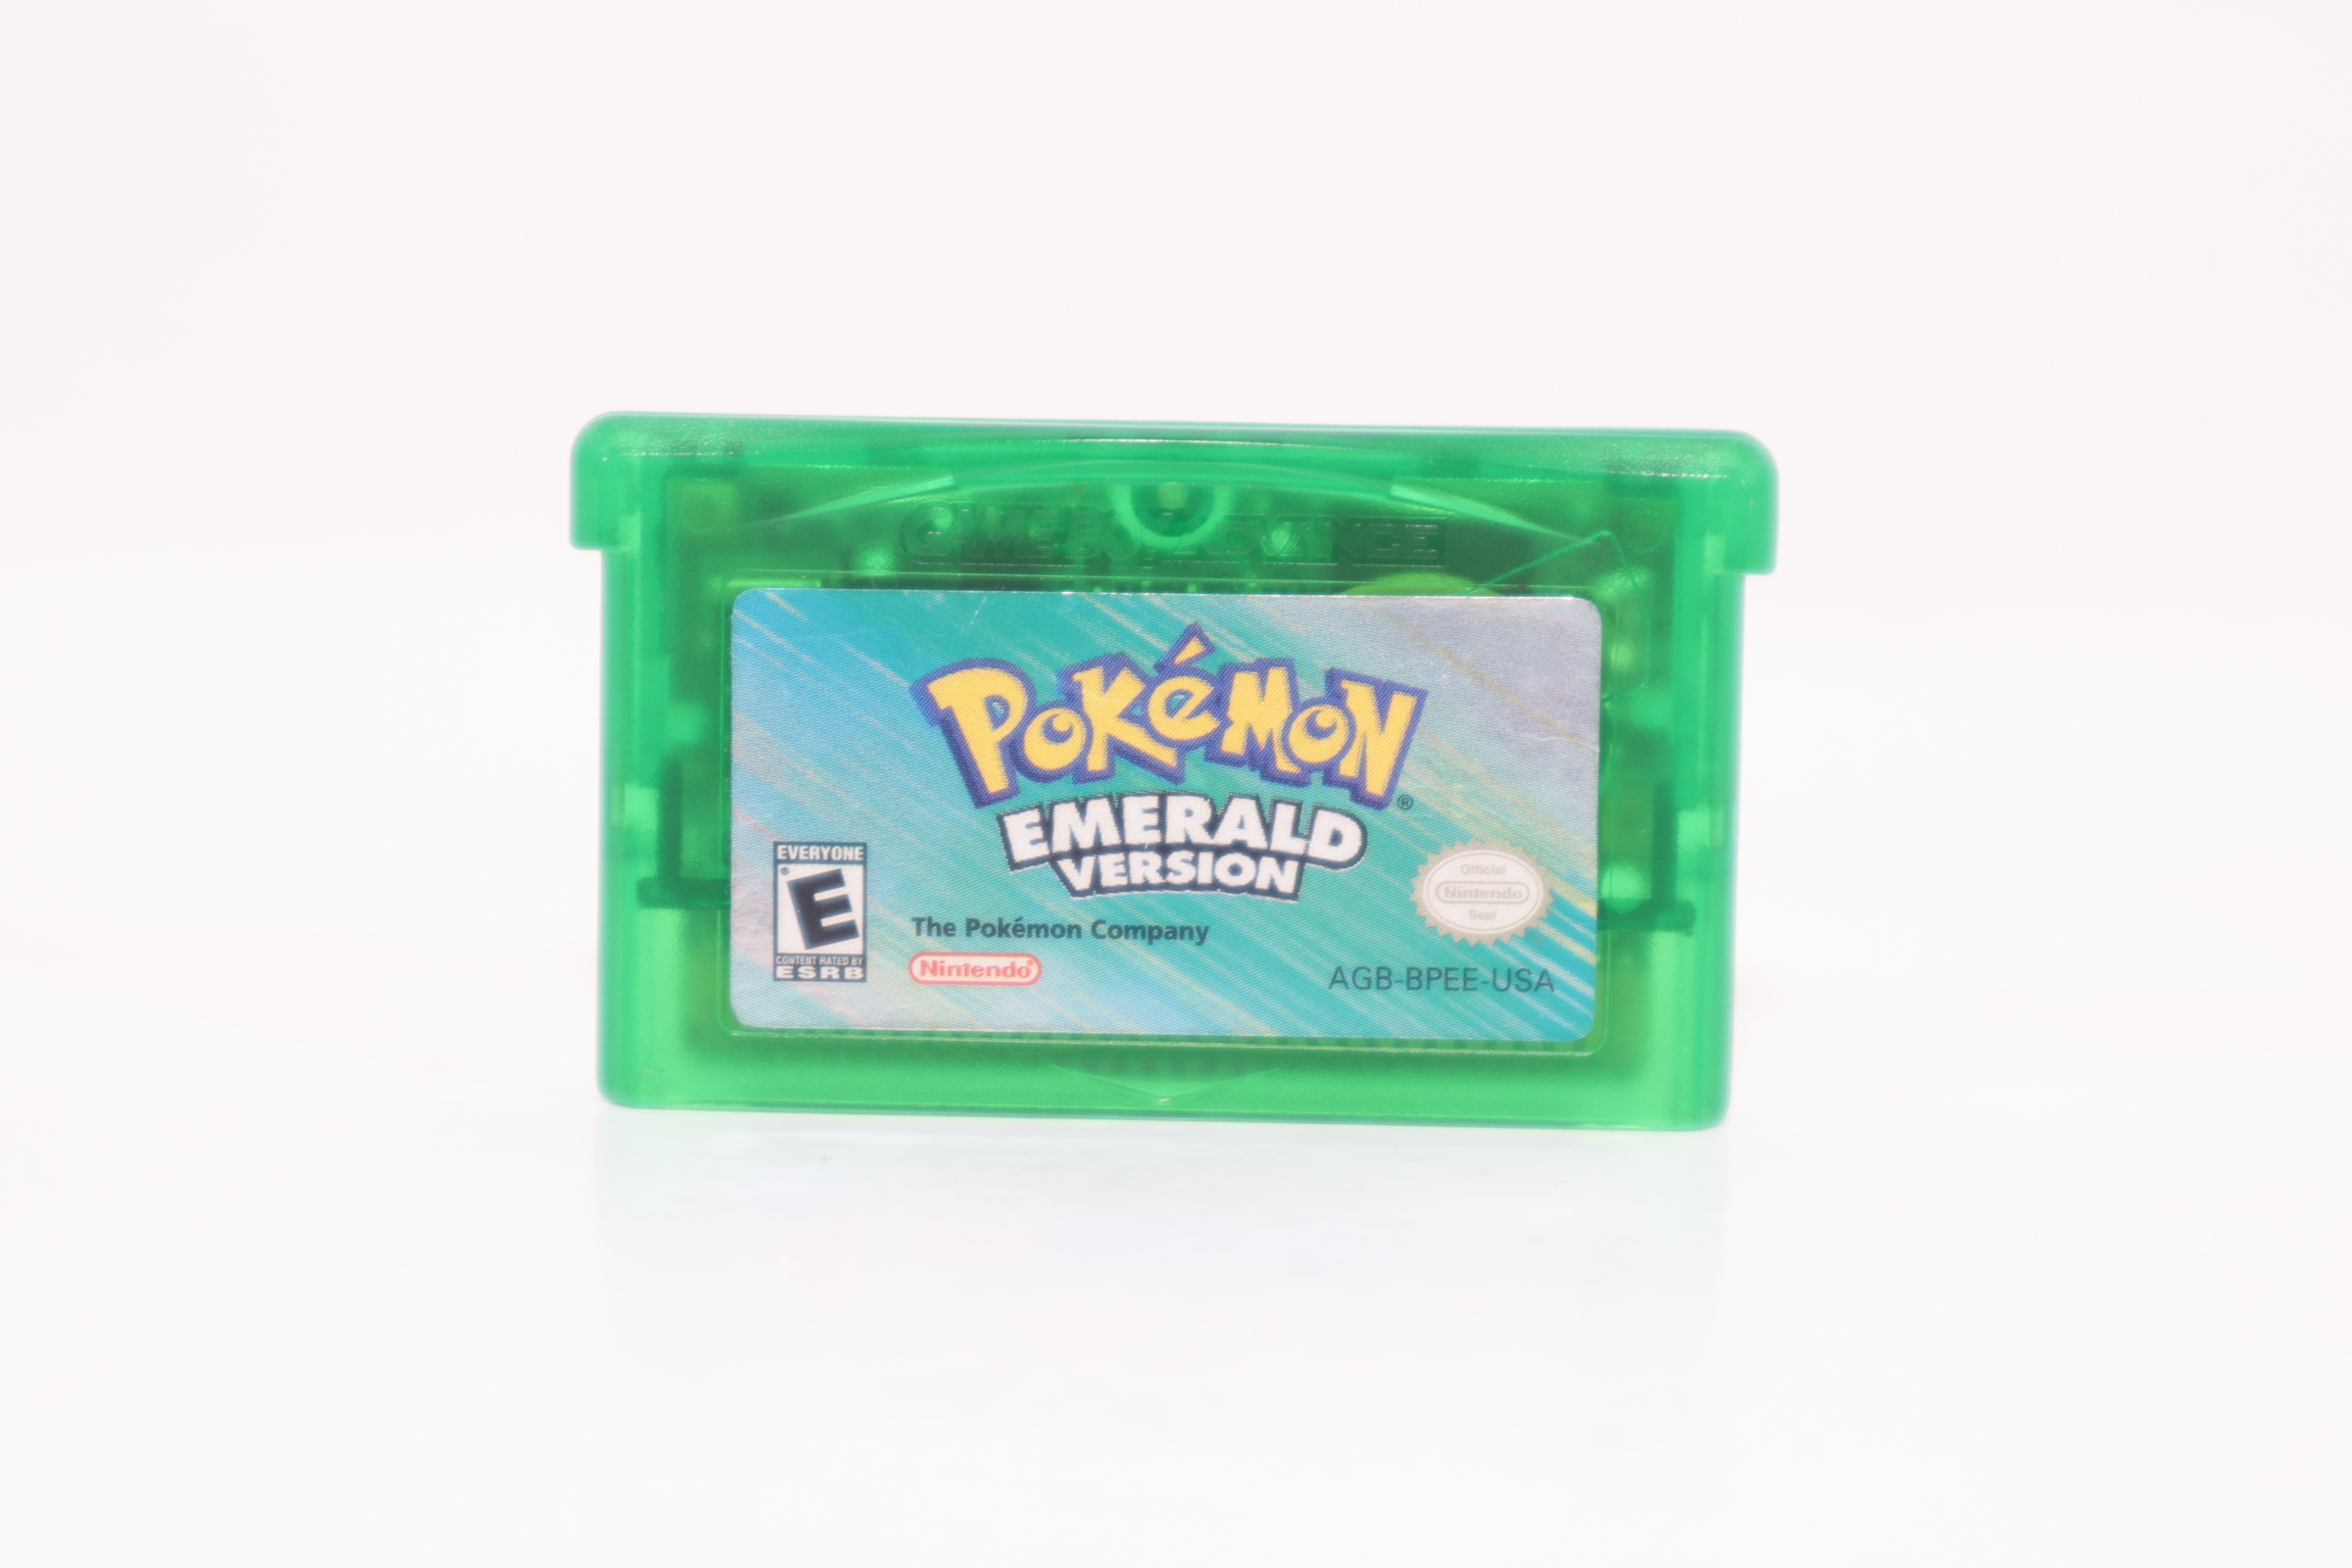 Pokémon Emerald - Volume 02 - Geek Point